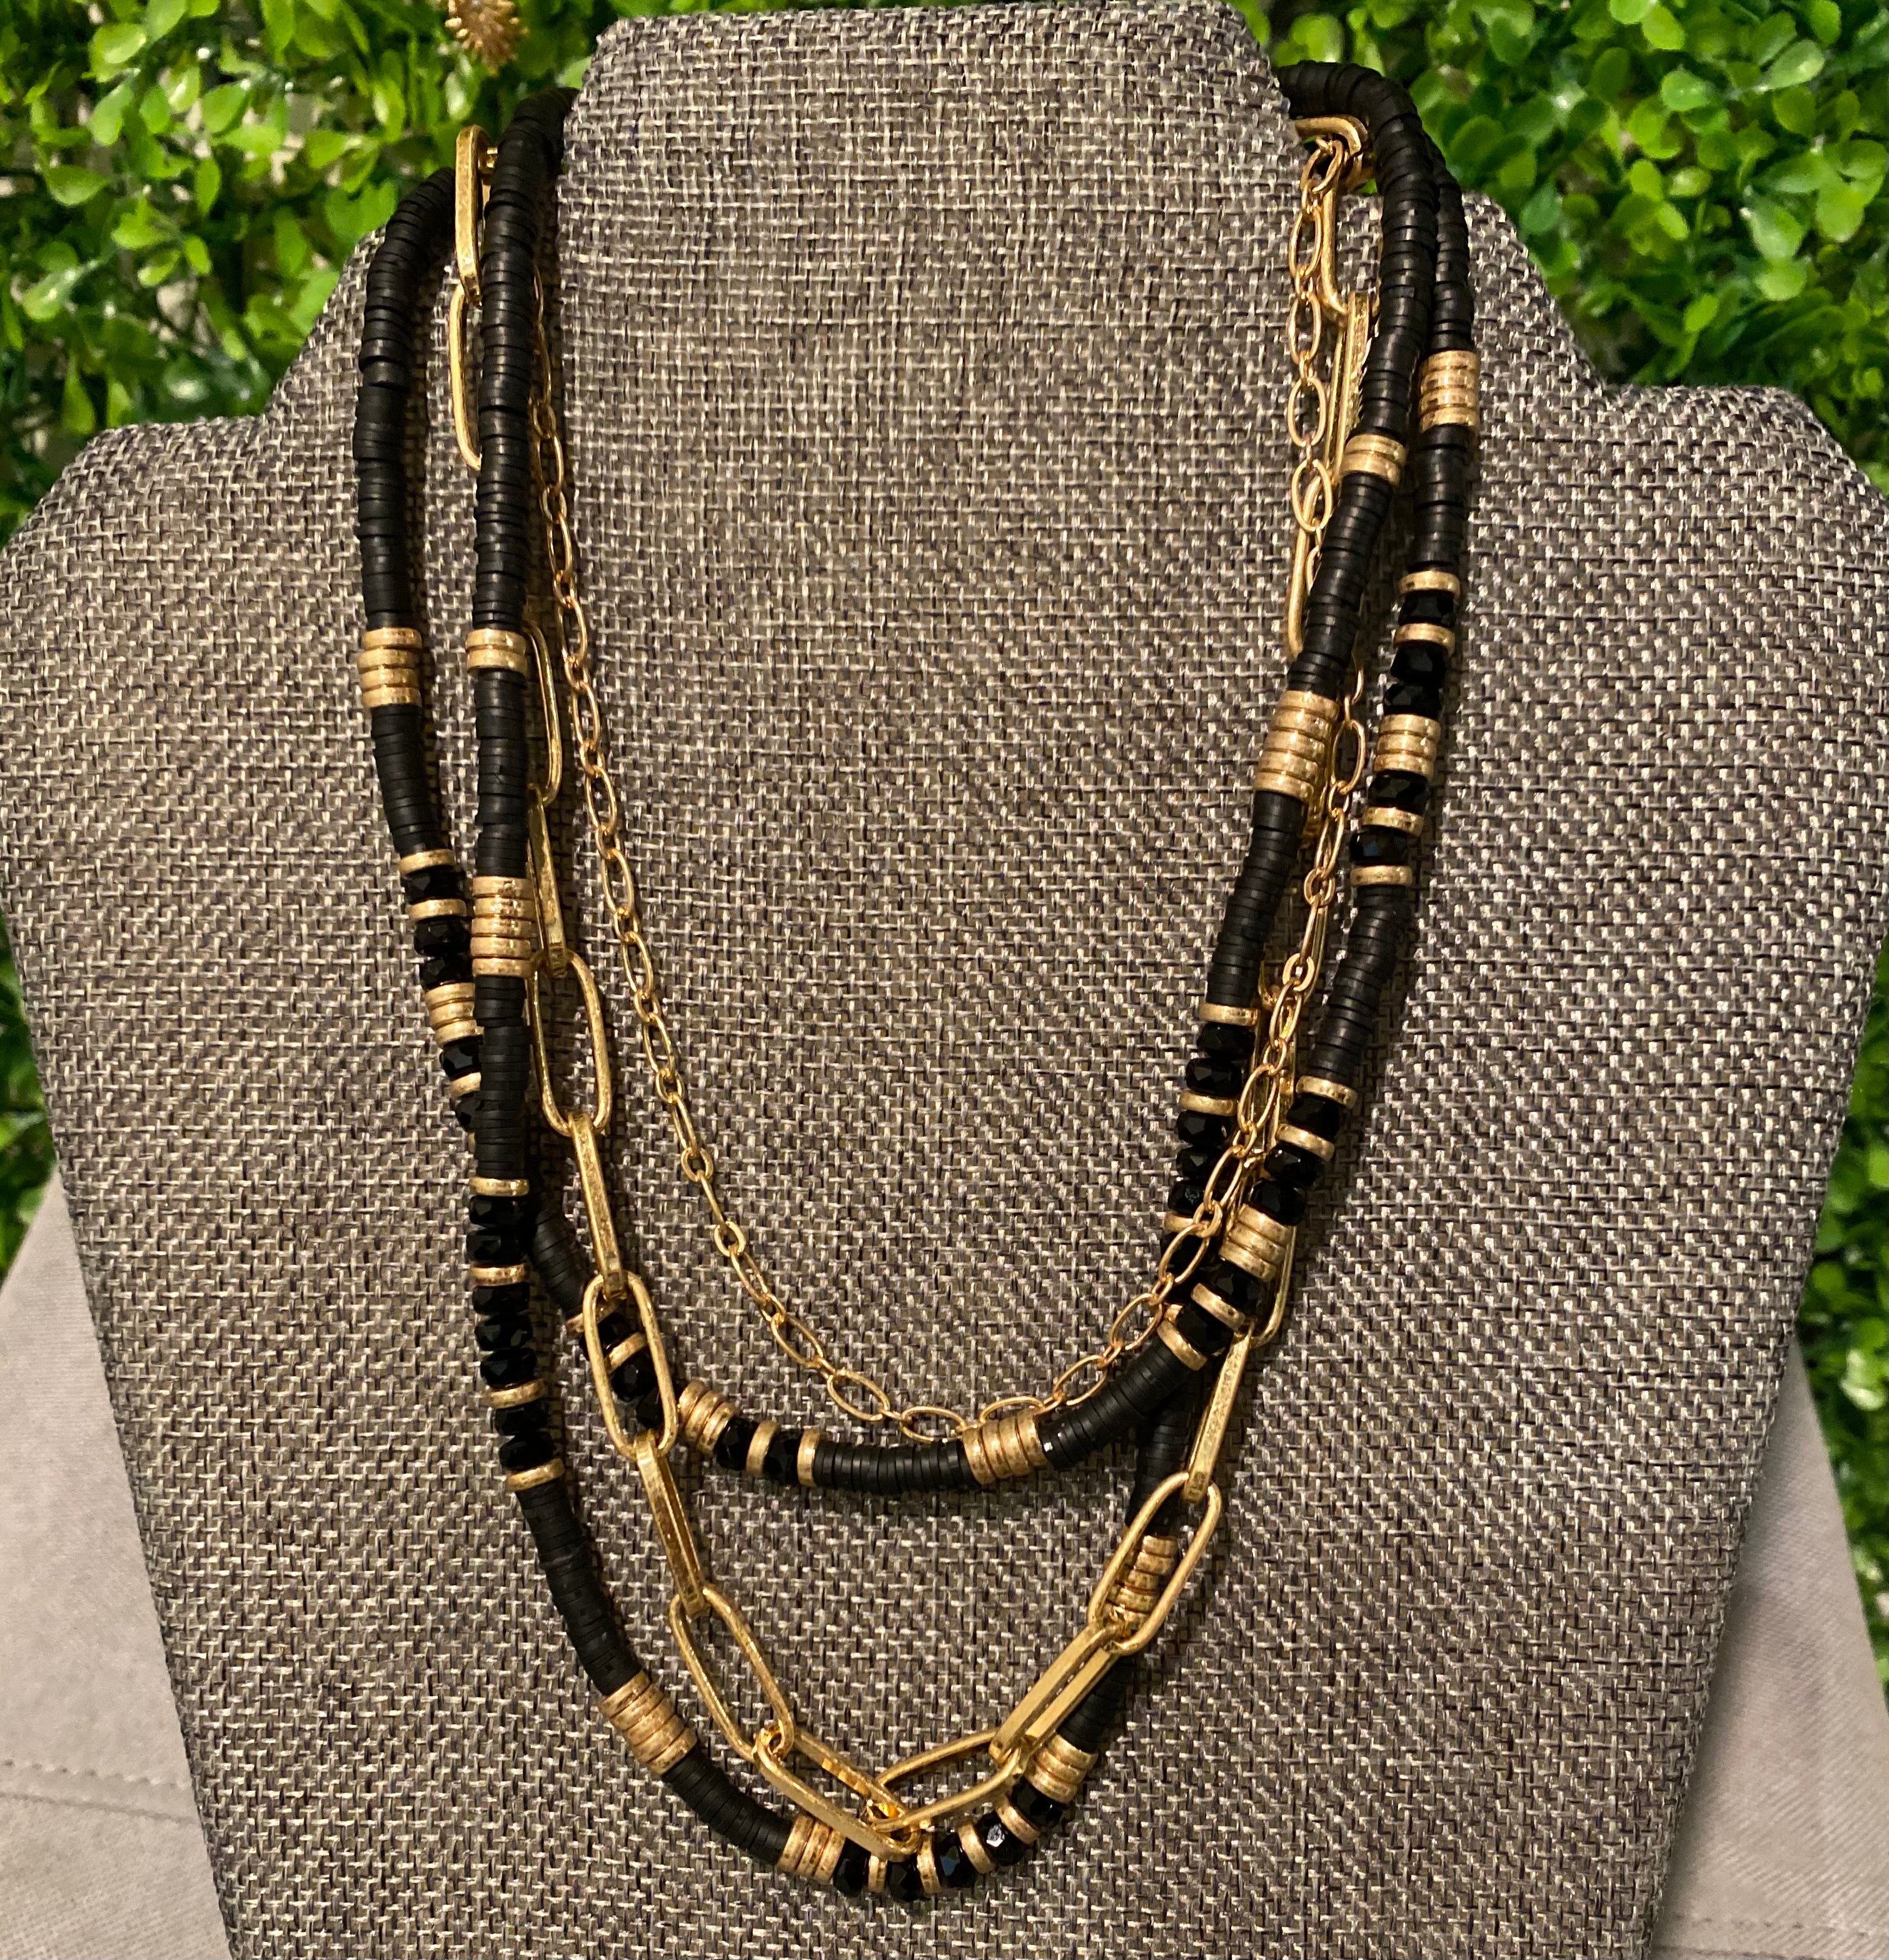 Black Bead Layered Necklace